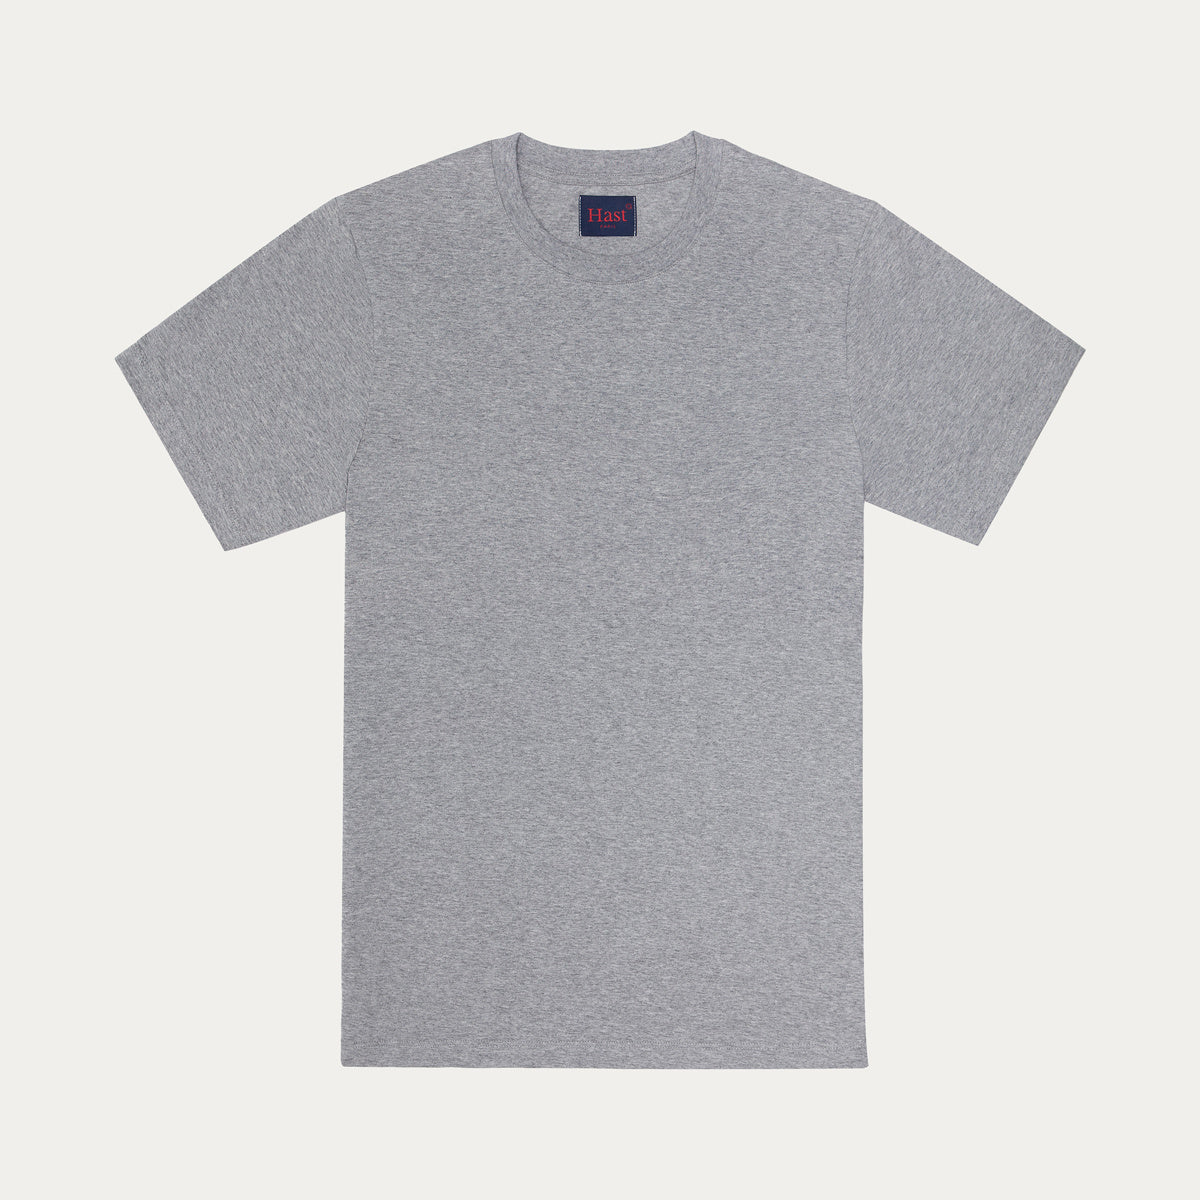 Gray organic cotton T-shirt